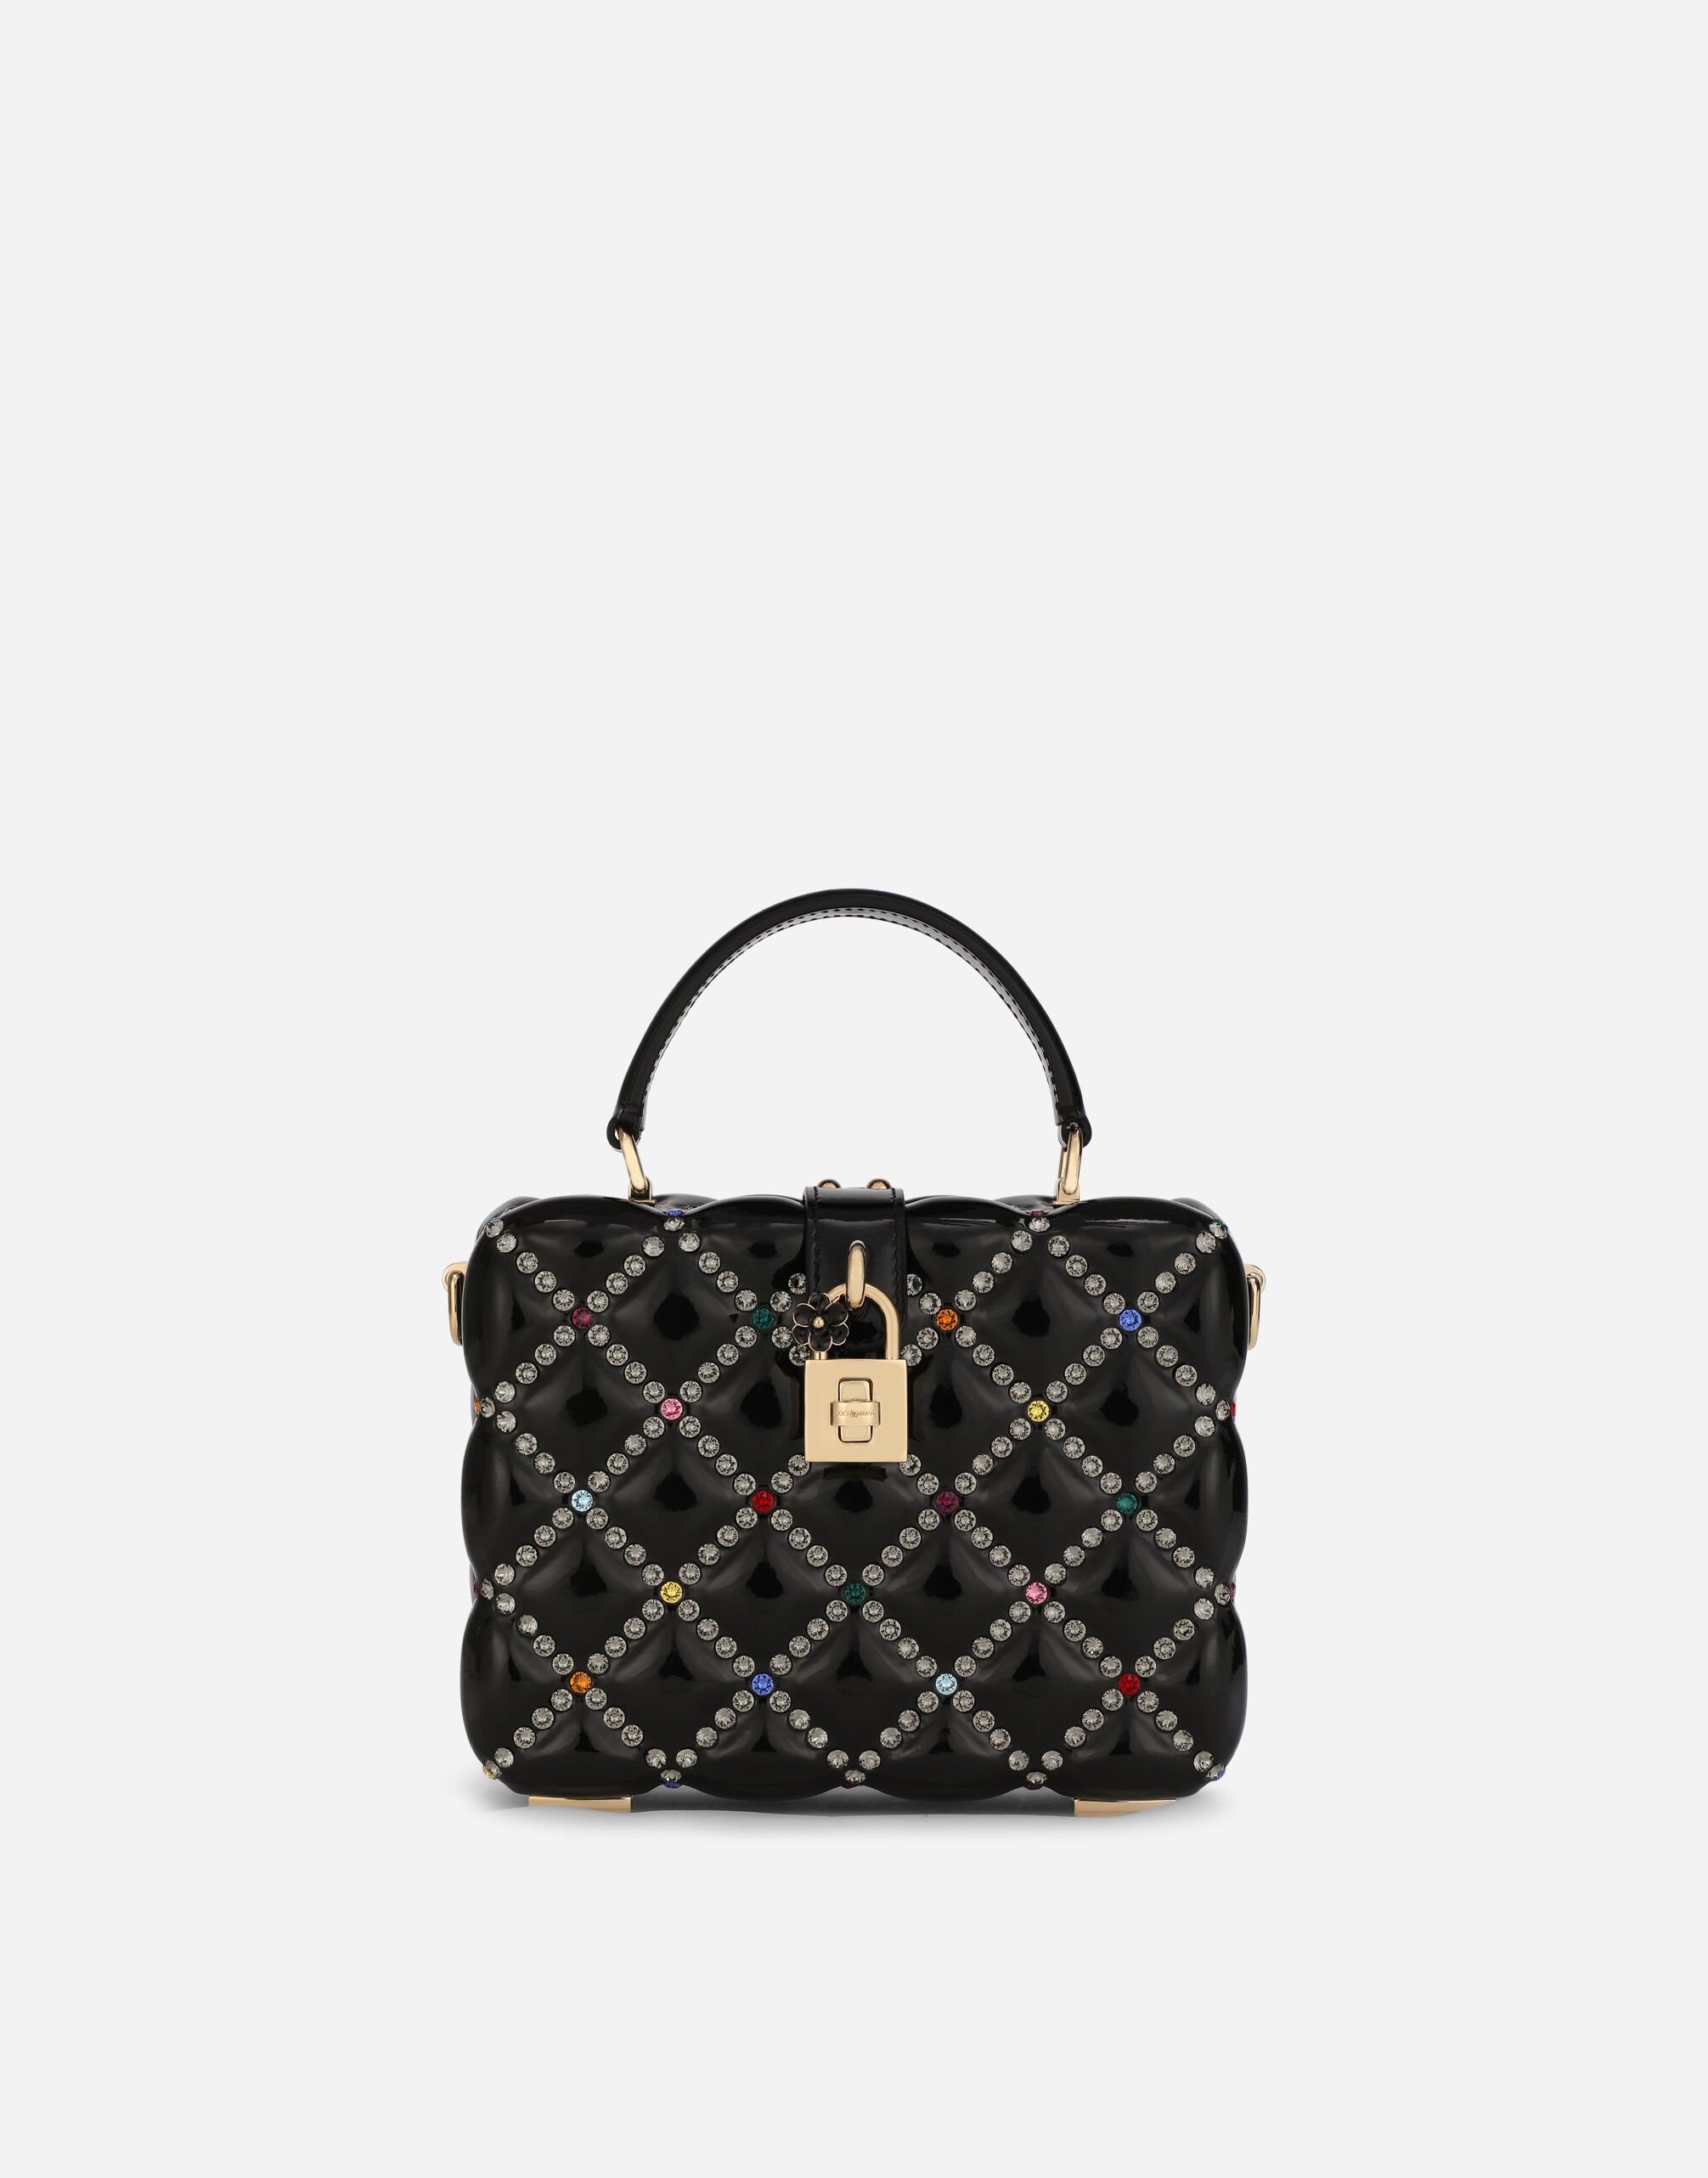 Dolce & Gabbana Resin Dolce Box bag with rhinestones Print BB5970AT878